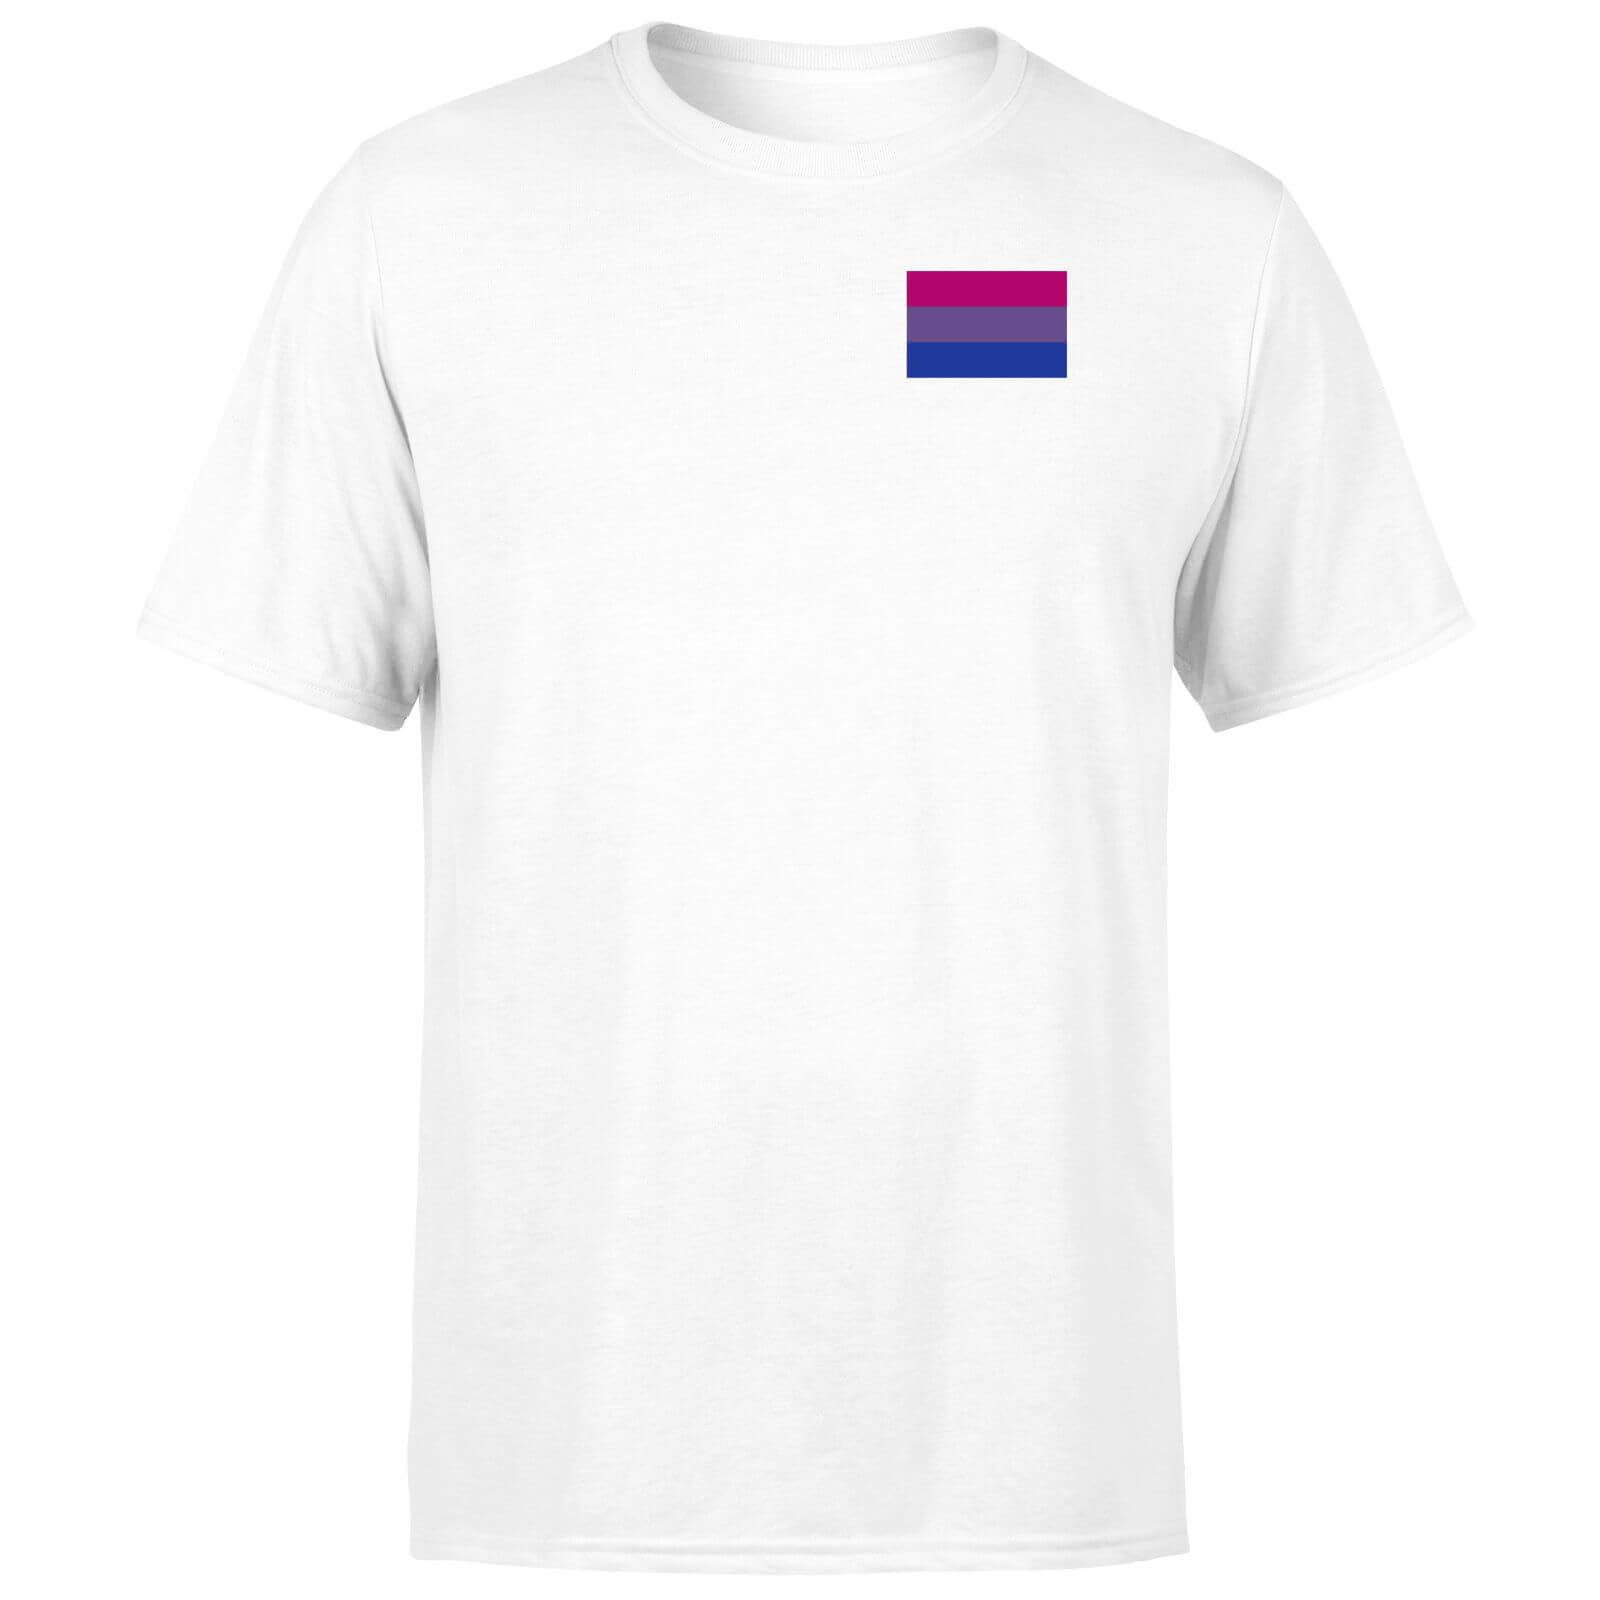 Bisexual Flag T-Shirt - White - XS - White